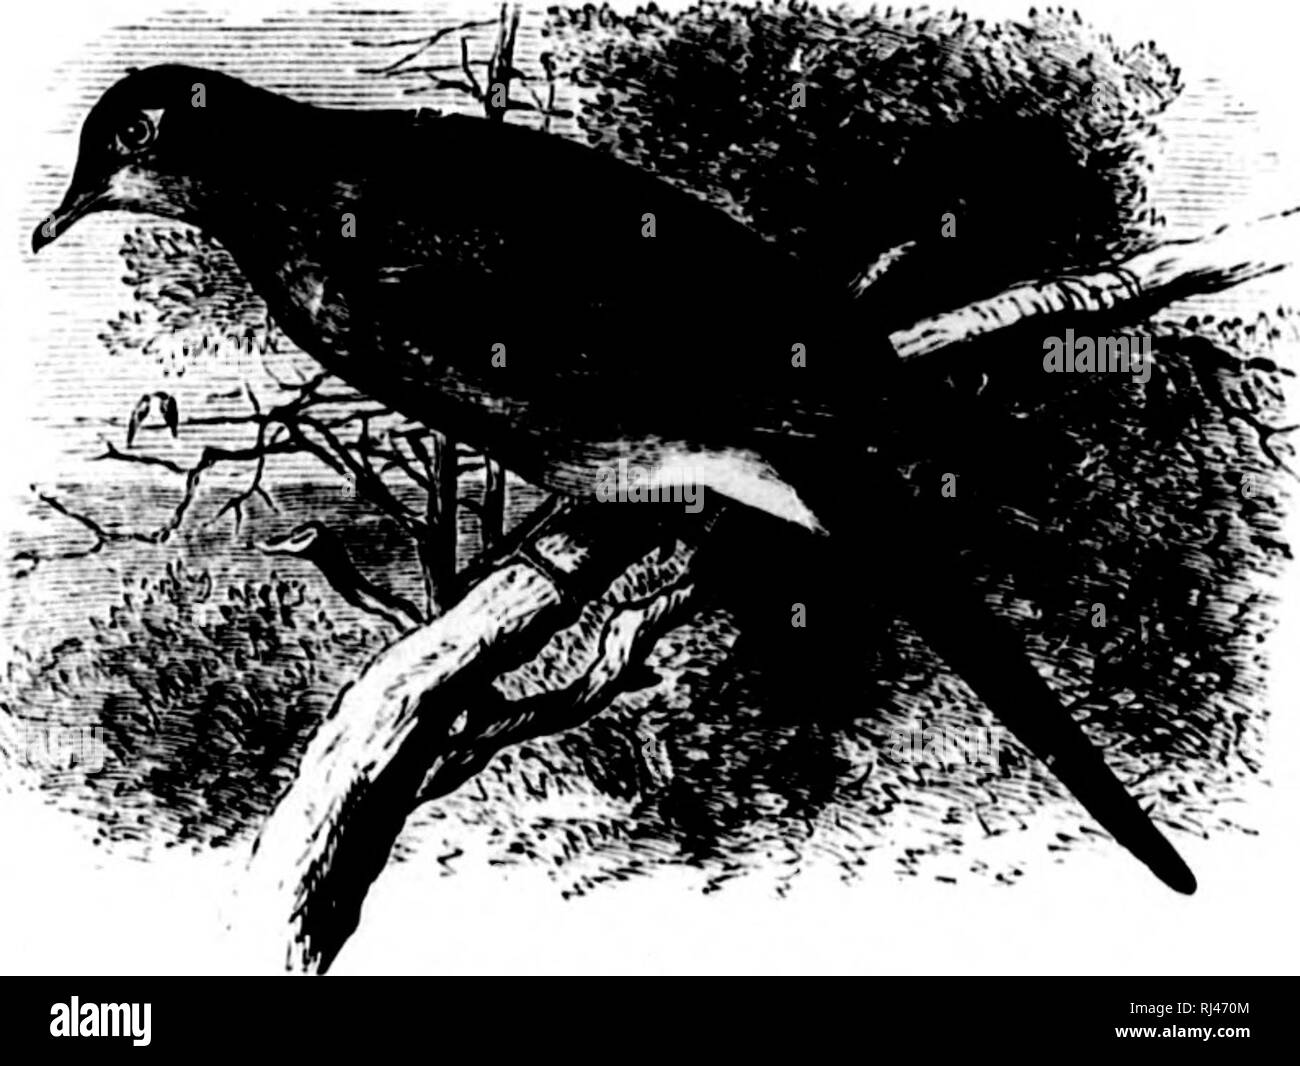 . Une histoire d'oiseaux de l'Amérique du Nord [microforme] : les oiseaux terrestres. Les oiseaux ; ornithologie ; Oiseaux ; Ornithologie. COIJ WllMDJ' ; -TUi : J'KiKU.NN 383 Zenaidura carolinensis, Hdnap. CASOLINA OU CONJOINT DE Colombe. Ohtidhit enrolinntsii '.', Linn.kl's, Syst. L'écrou. I, 1700, n°, iiSO :;7. Â Latham, Iiul. II, 17'JO, 013. Â La blr.s(.s, Am. Orii. V, 181:2, !)], A. xliii. - Au n. Oni. ^ vmx. 1, Iasi, HI ; V, 1S39, 555, jil. xvii.âXriTAl.l,, ^Maii. I, 18;52, (&gt;20. 'J'lirhir citroën/iiicii.iis, ISiilssun, I, 11, paragraphe 1, jil. viii. L'r/n/ii.i/est/iiiriisi (â iini.i, liicil. Liste, lS:i7. Â I'liis. Iliiils Aiiicr. V, ISl'J, Mo, 1)1. Banque D'Images